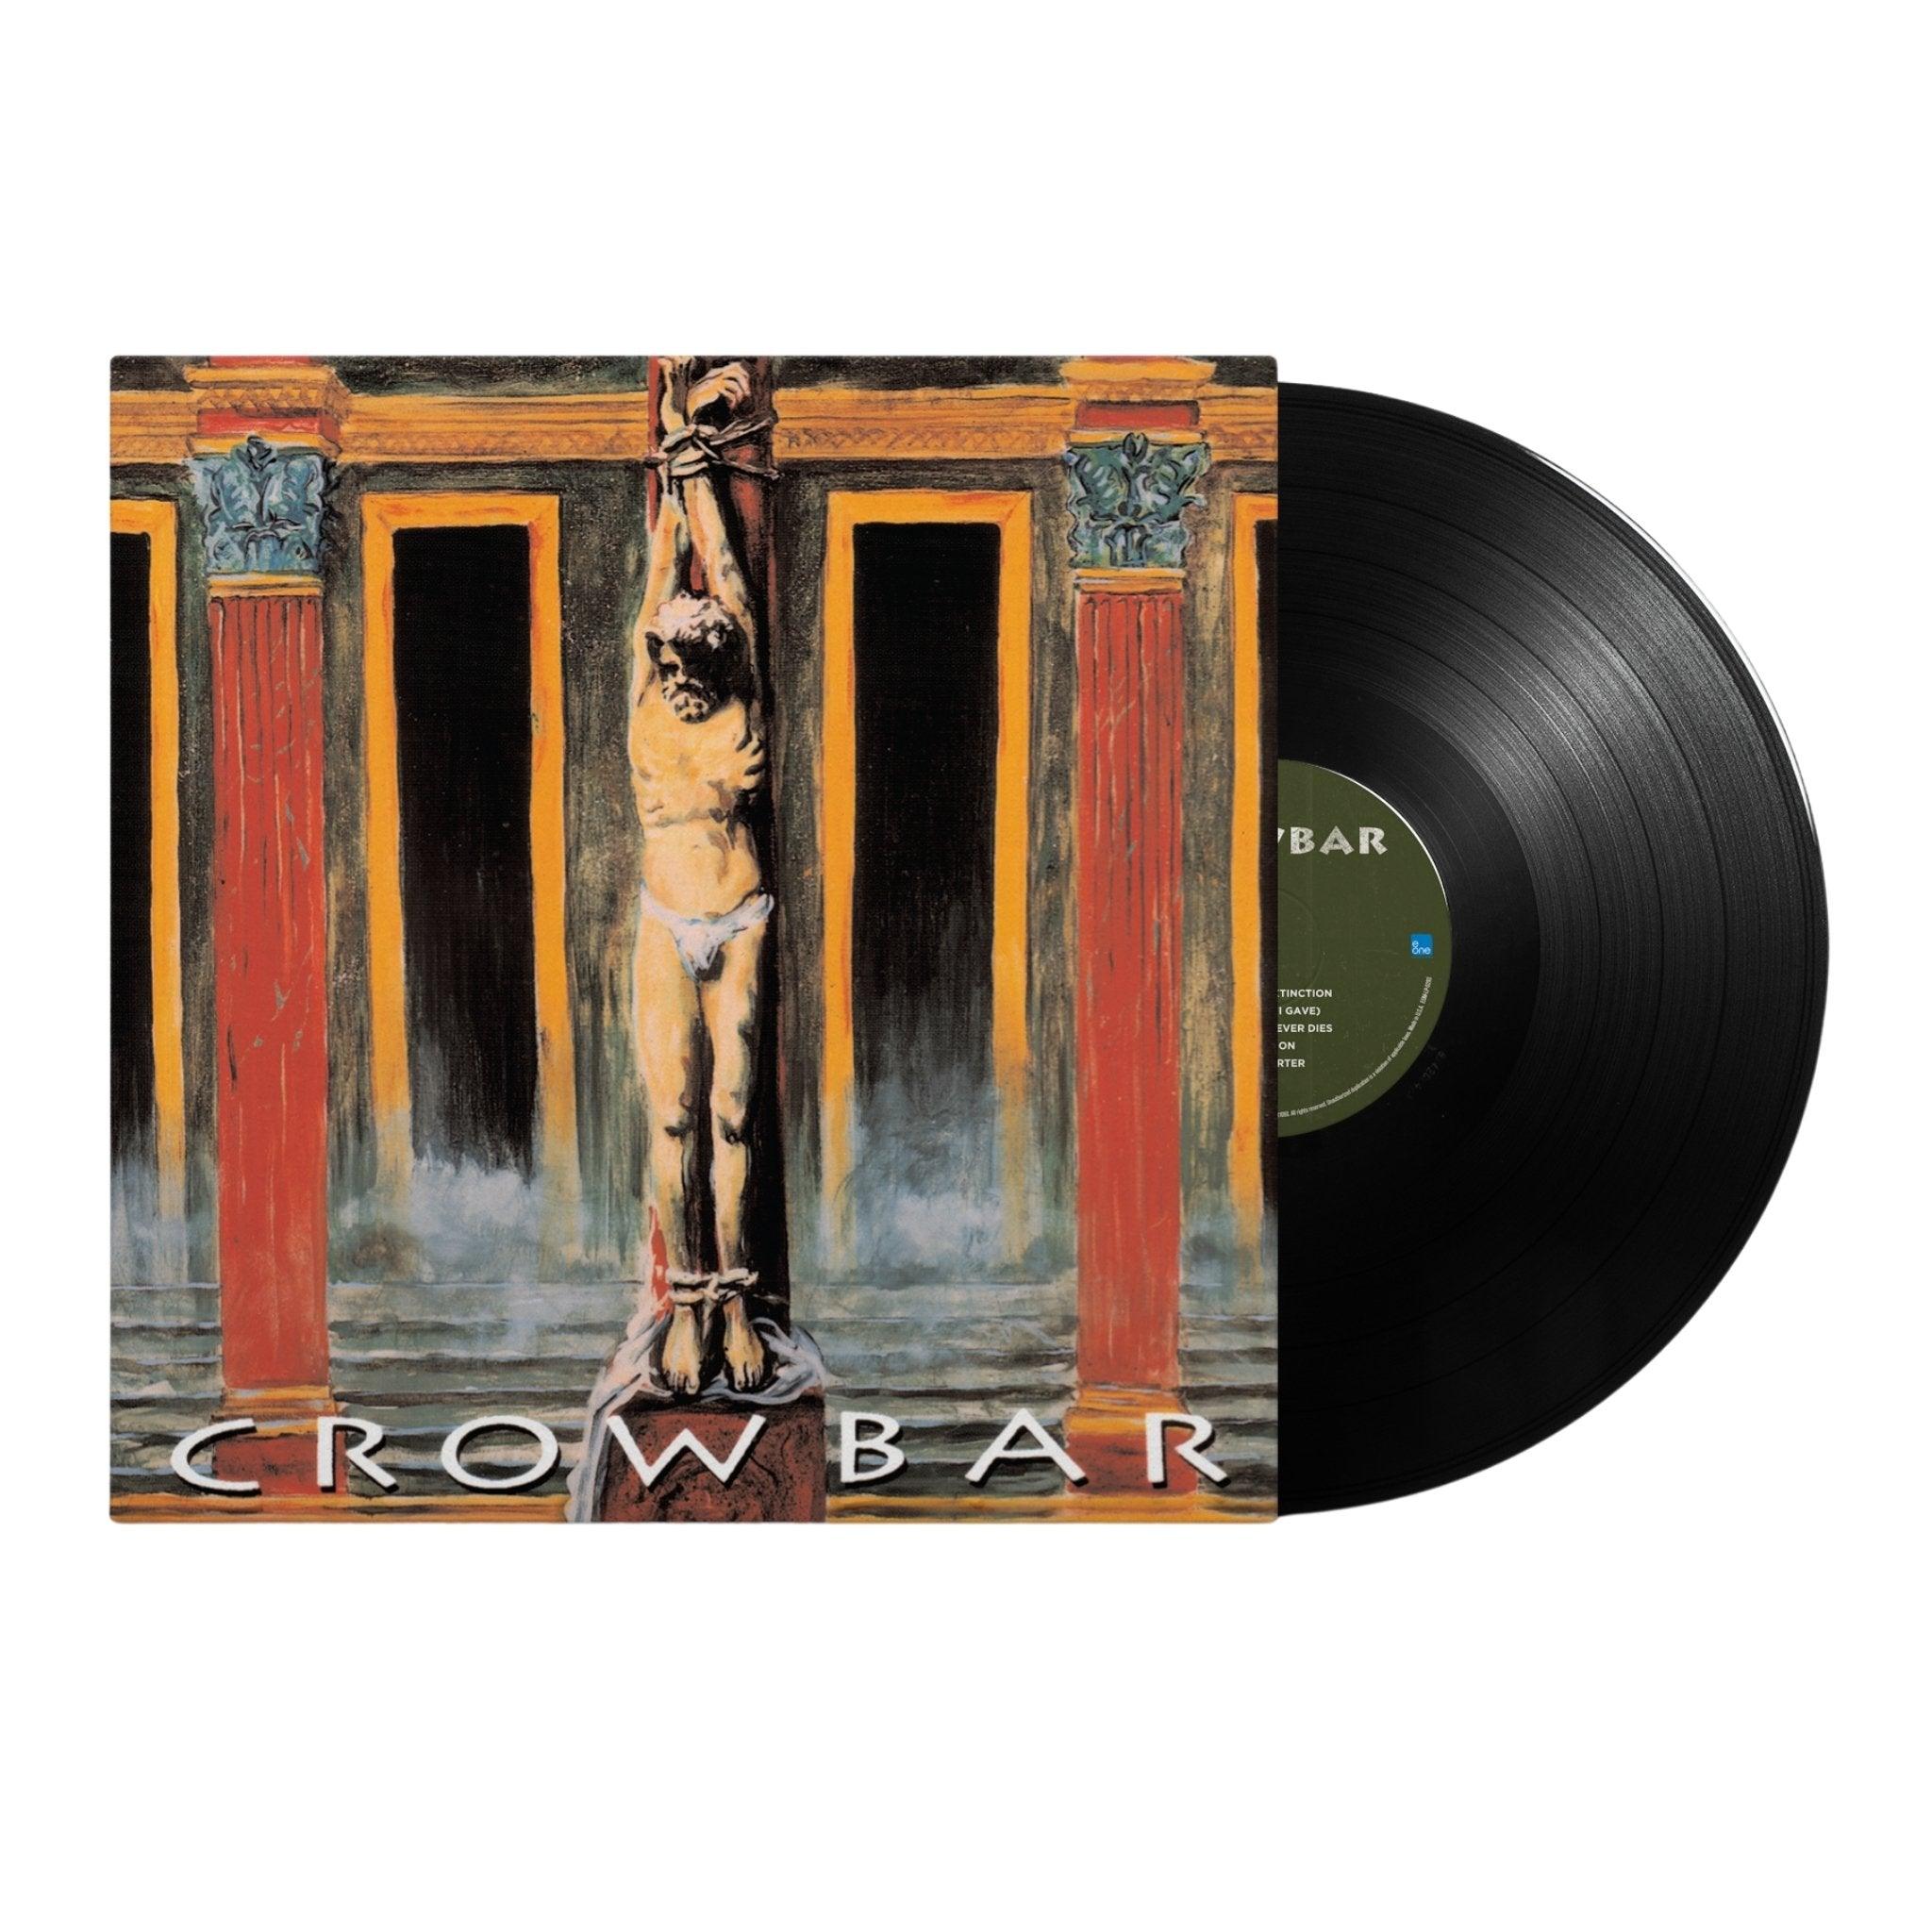 Crowbar Self-Titled Crowbar Vinyl